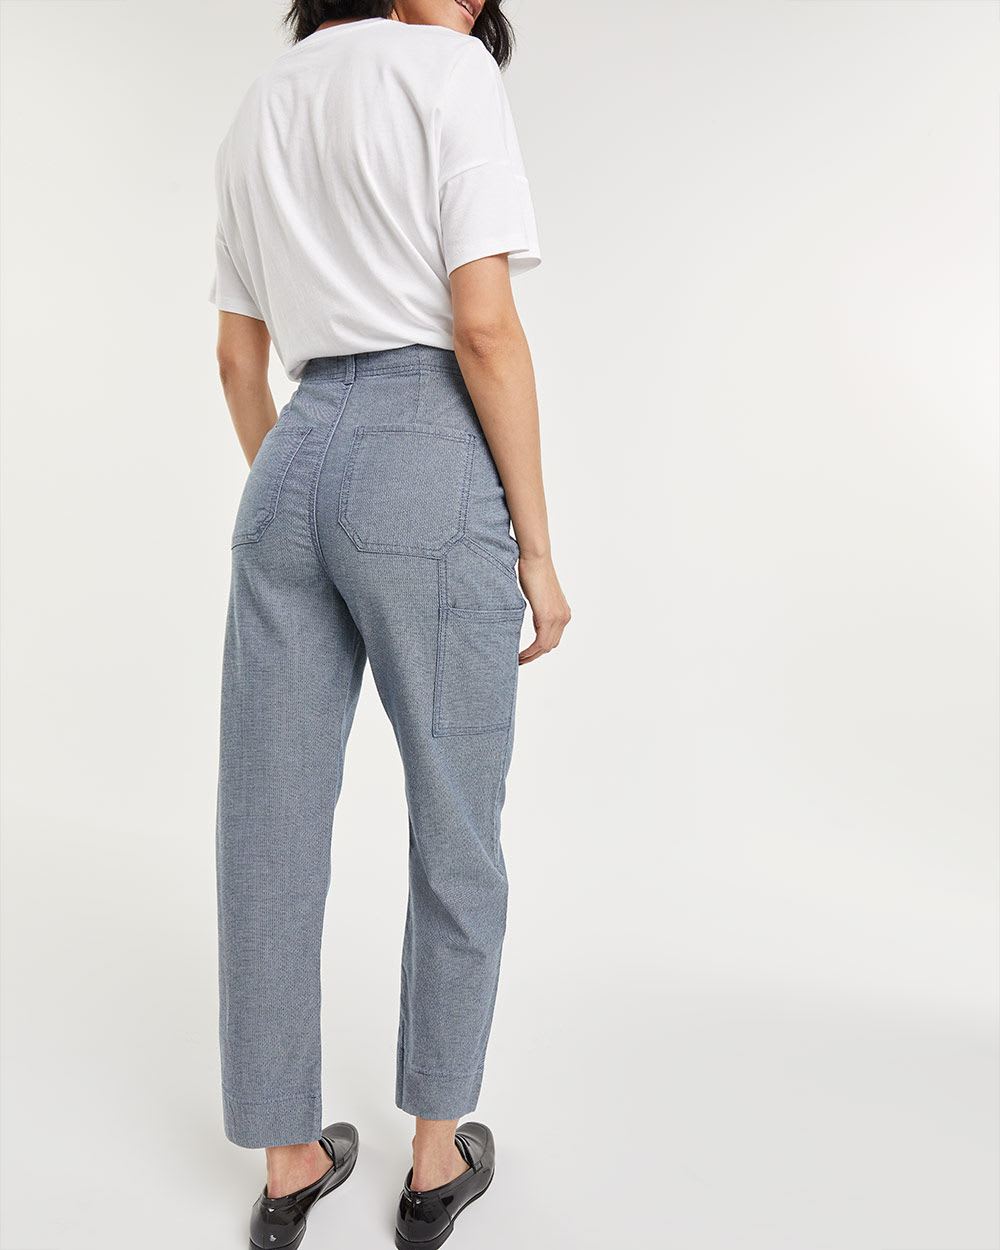 Pantalon chino cheville à jambe droite, taille haute et motif chevron – Long